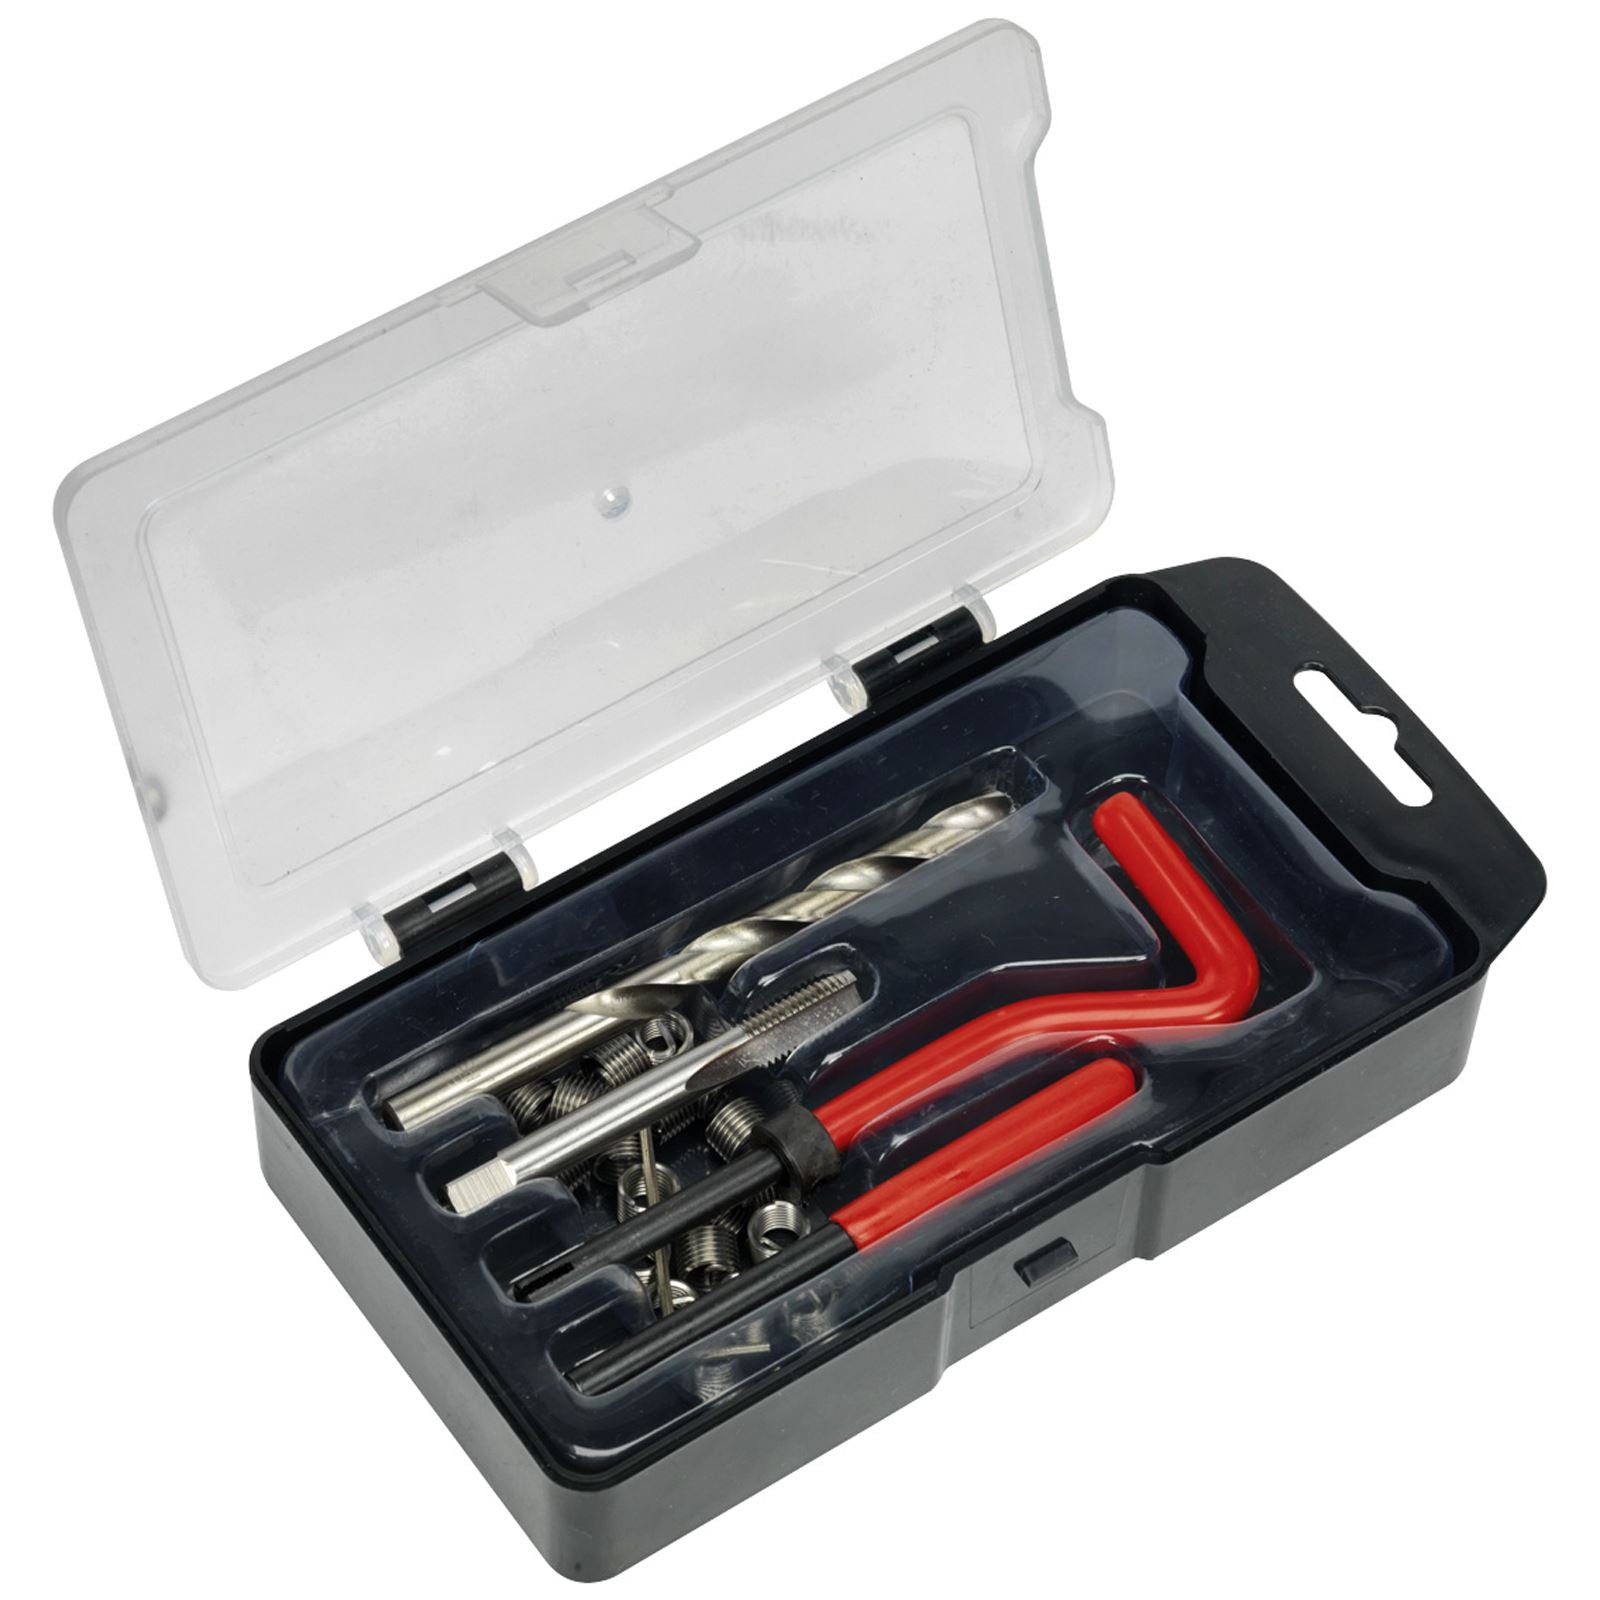 Sealey Helicoil Thread Repair Kit M8 x 1.25mm